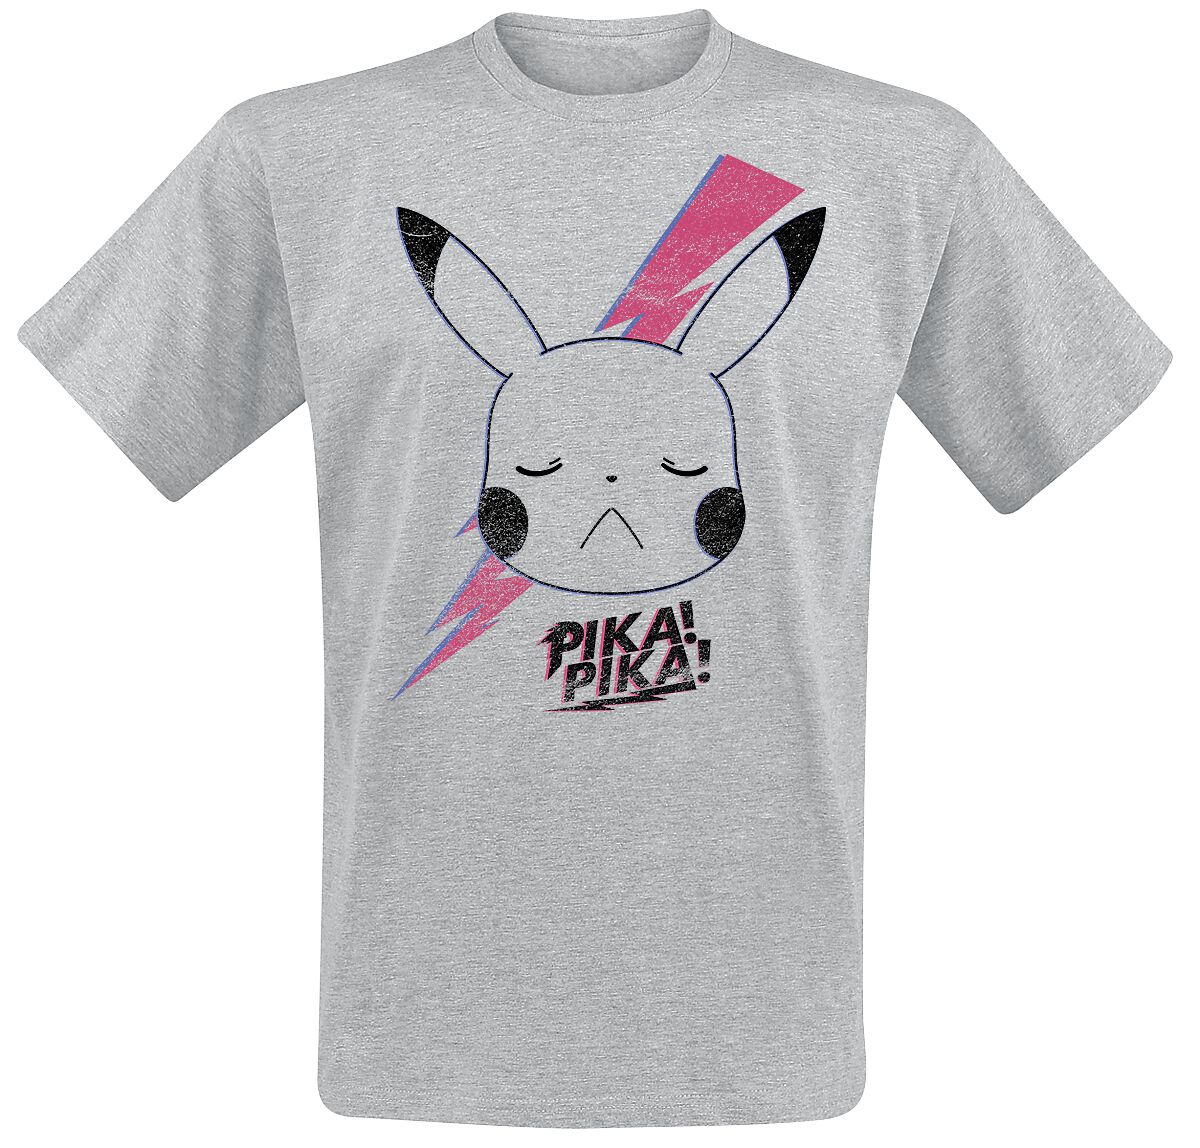 Pikachu T-Shirt grau meliert von Pokémon